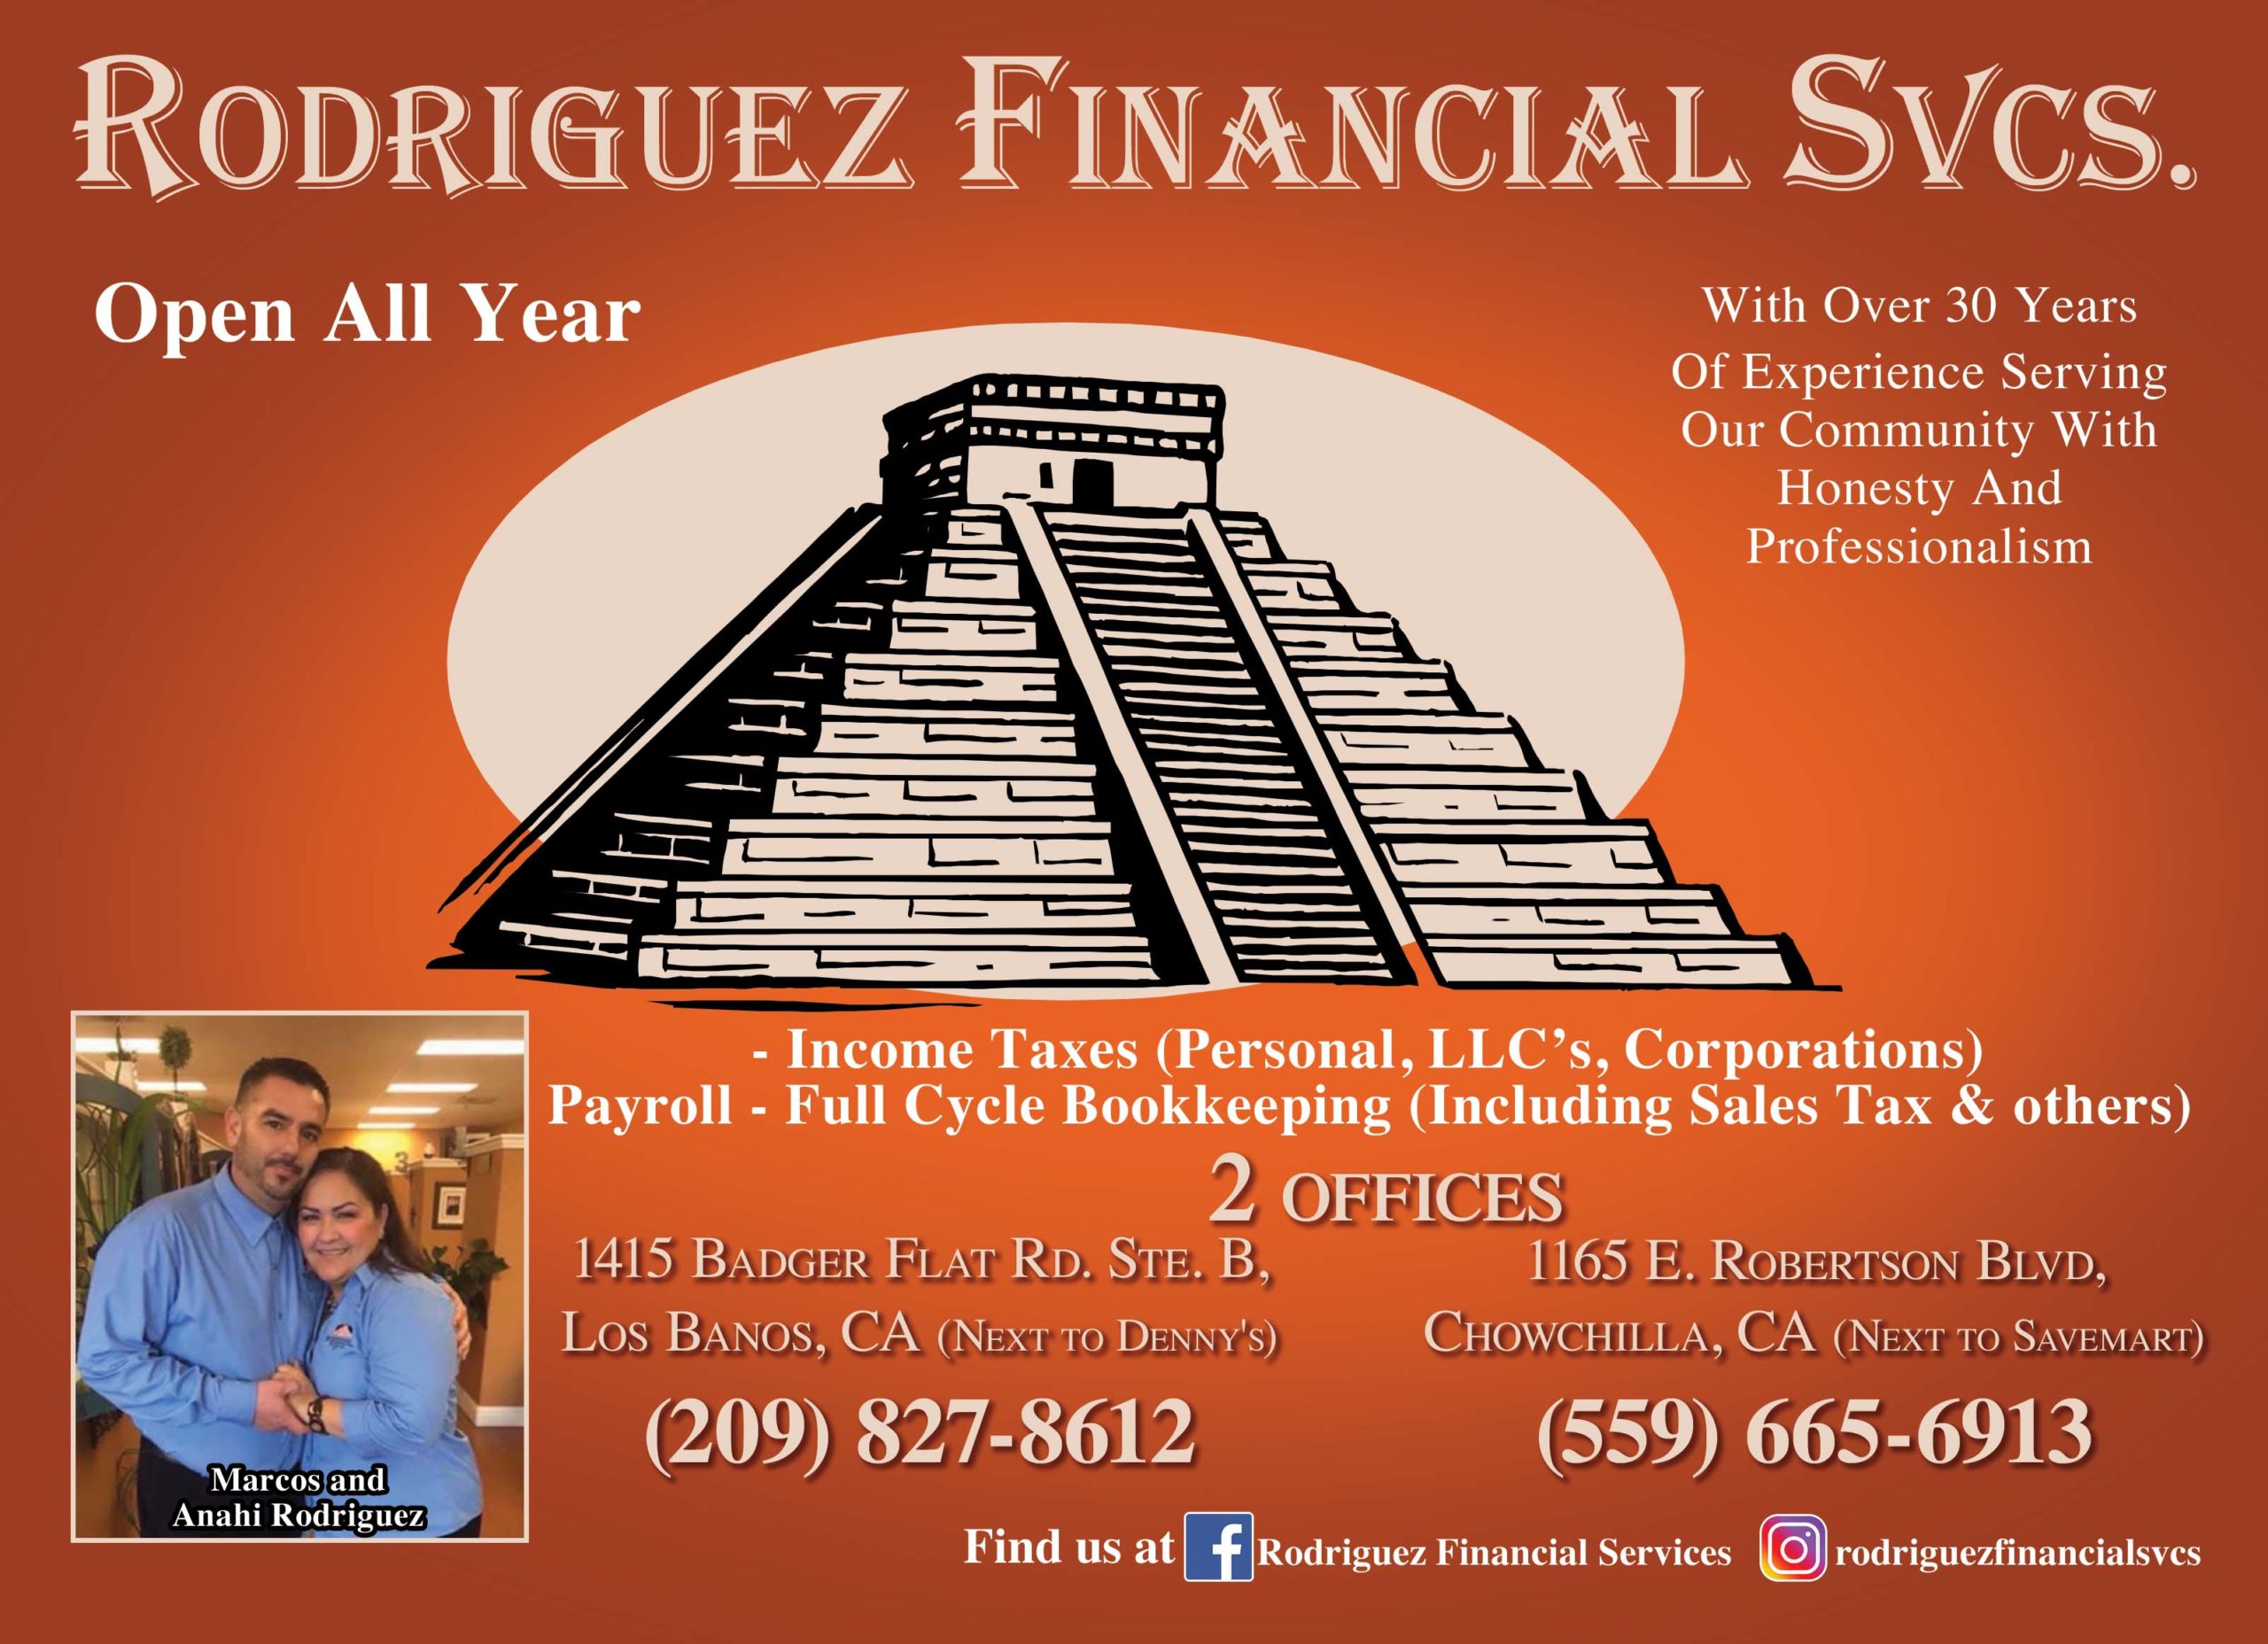 Rodriguez Financial Services